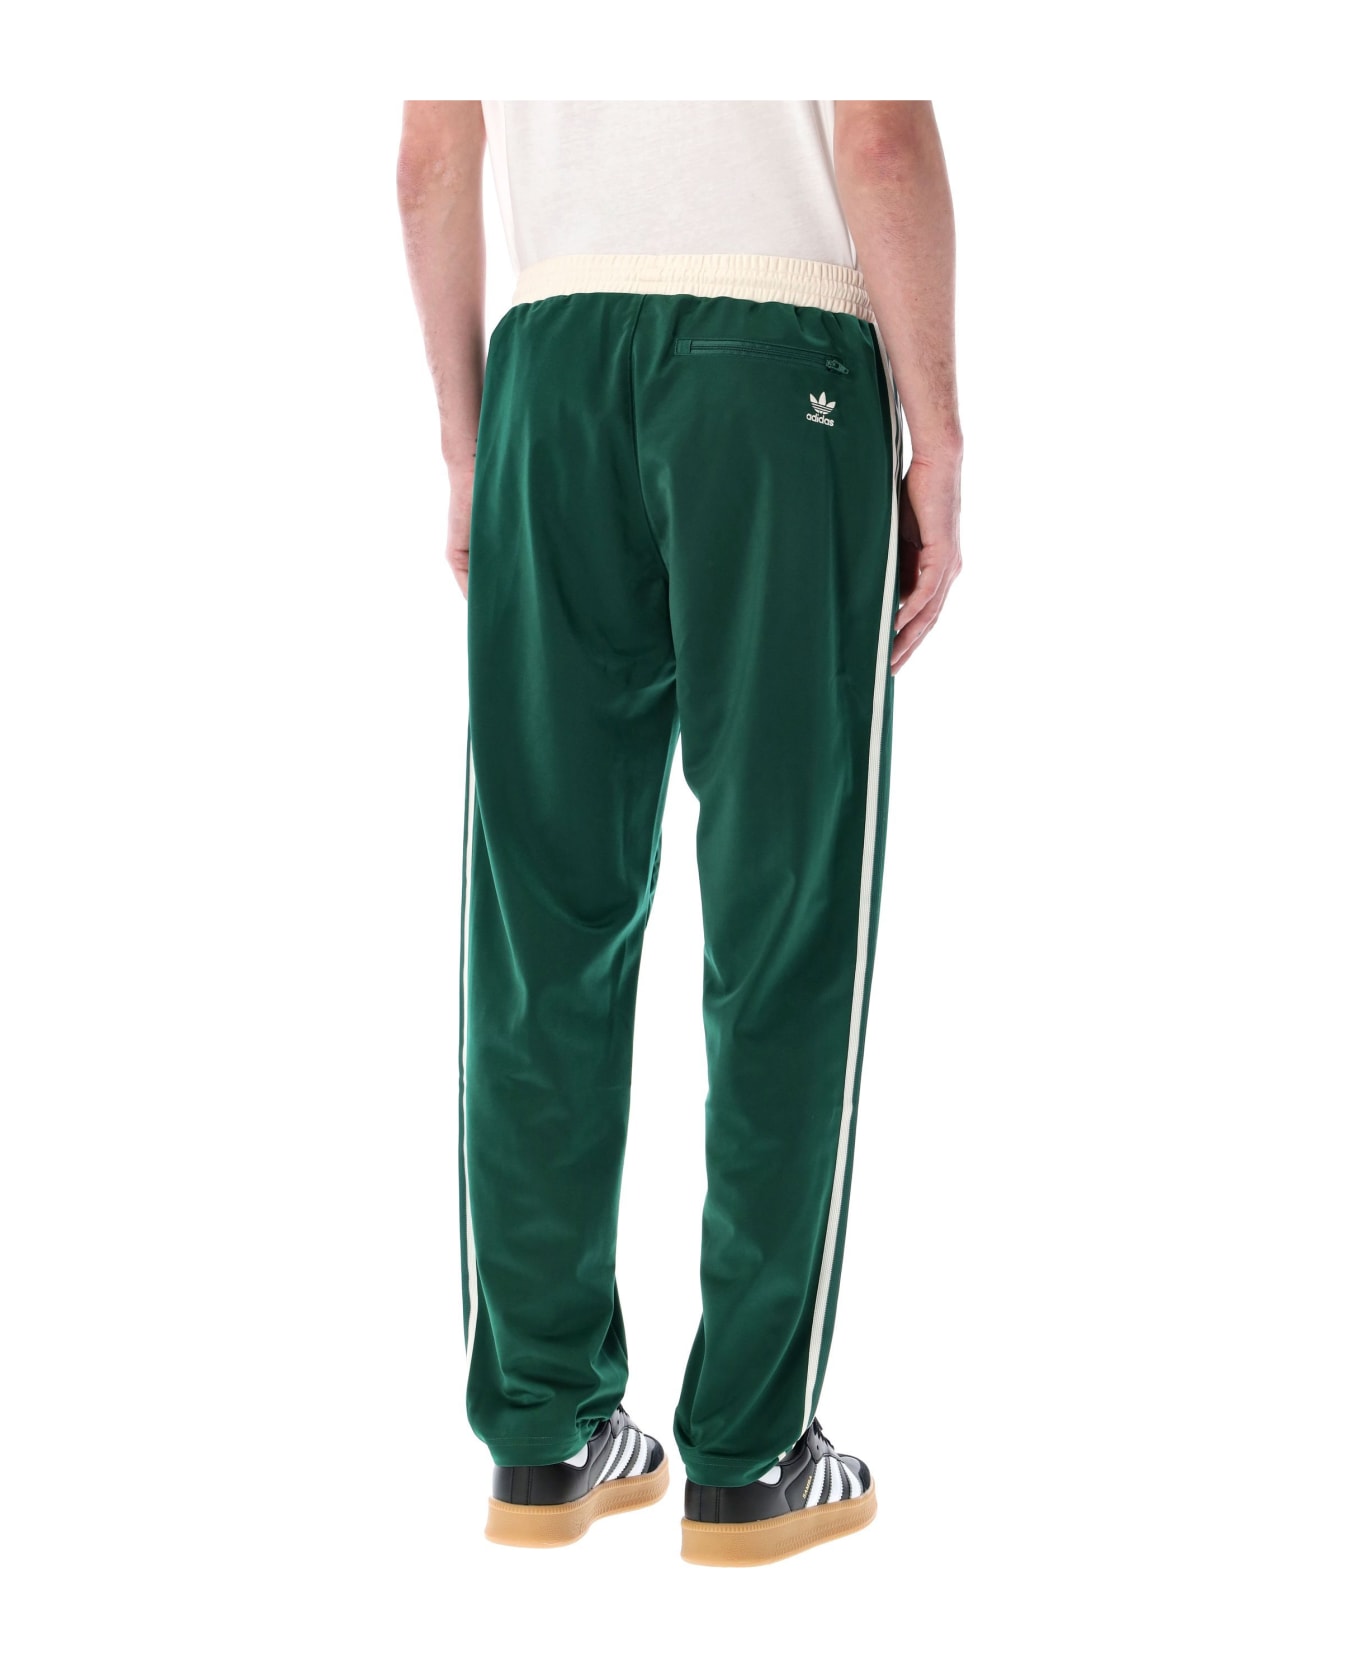 Adidas Originals Sst Track Pants - WHITE/GREEN